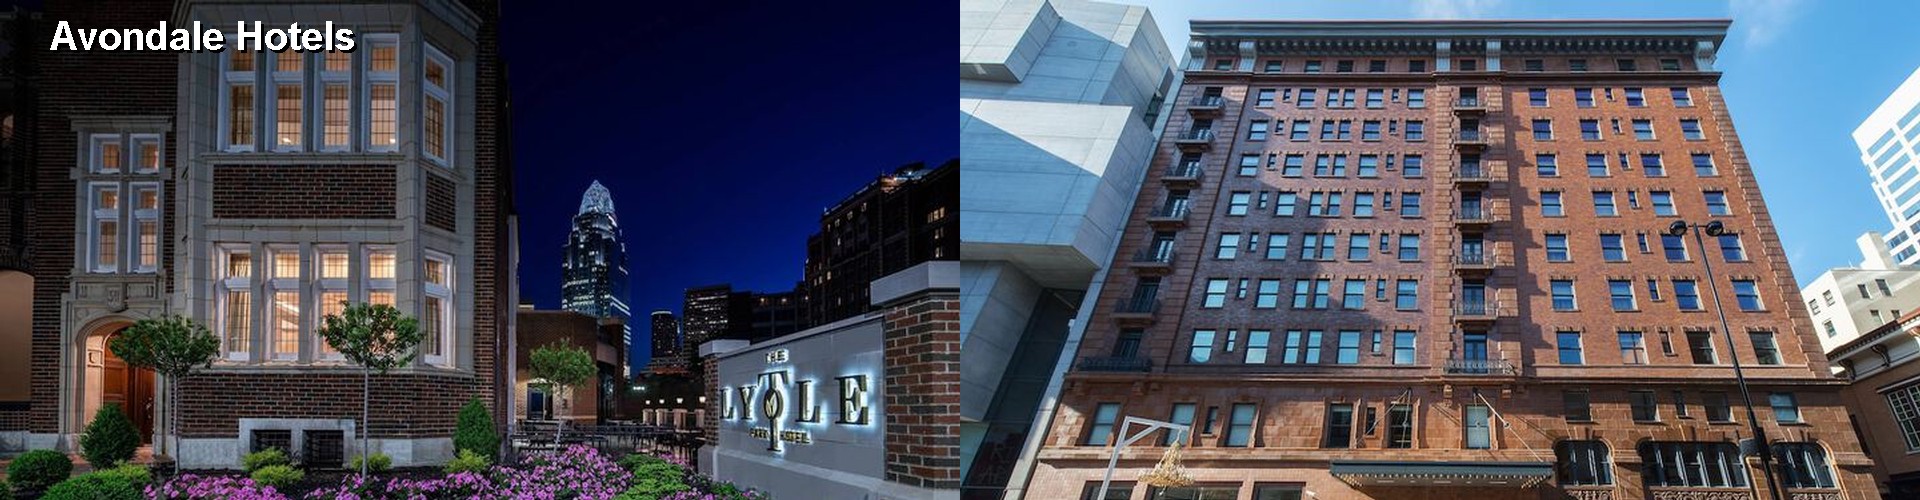 5 Best Hotels near Avondale